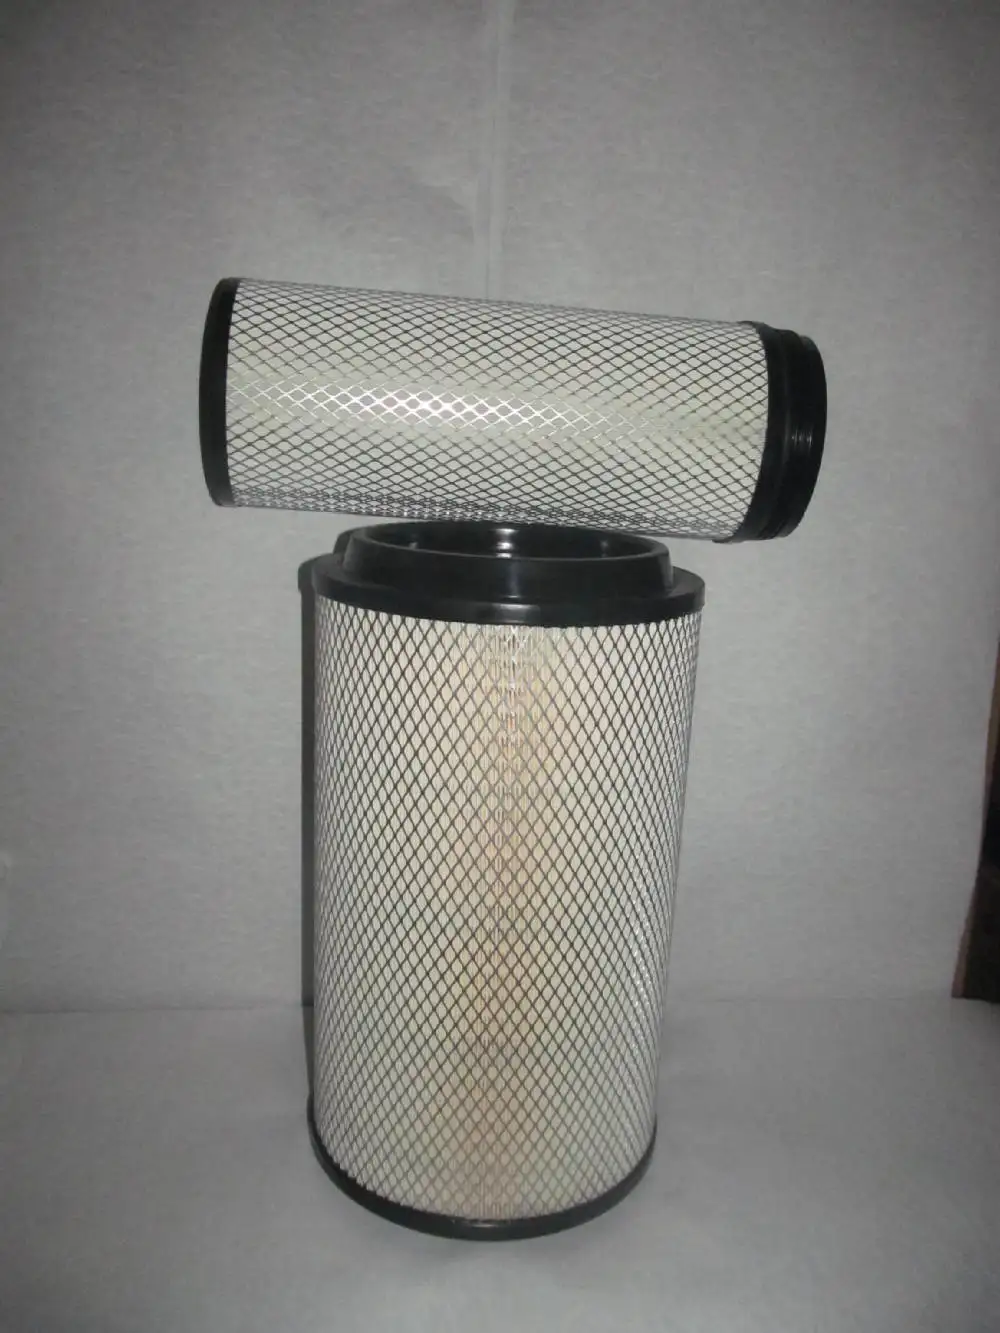 Auto plain air filter , high filtration air filter for heavy truck/car, hepa air filter